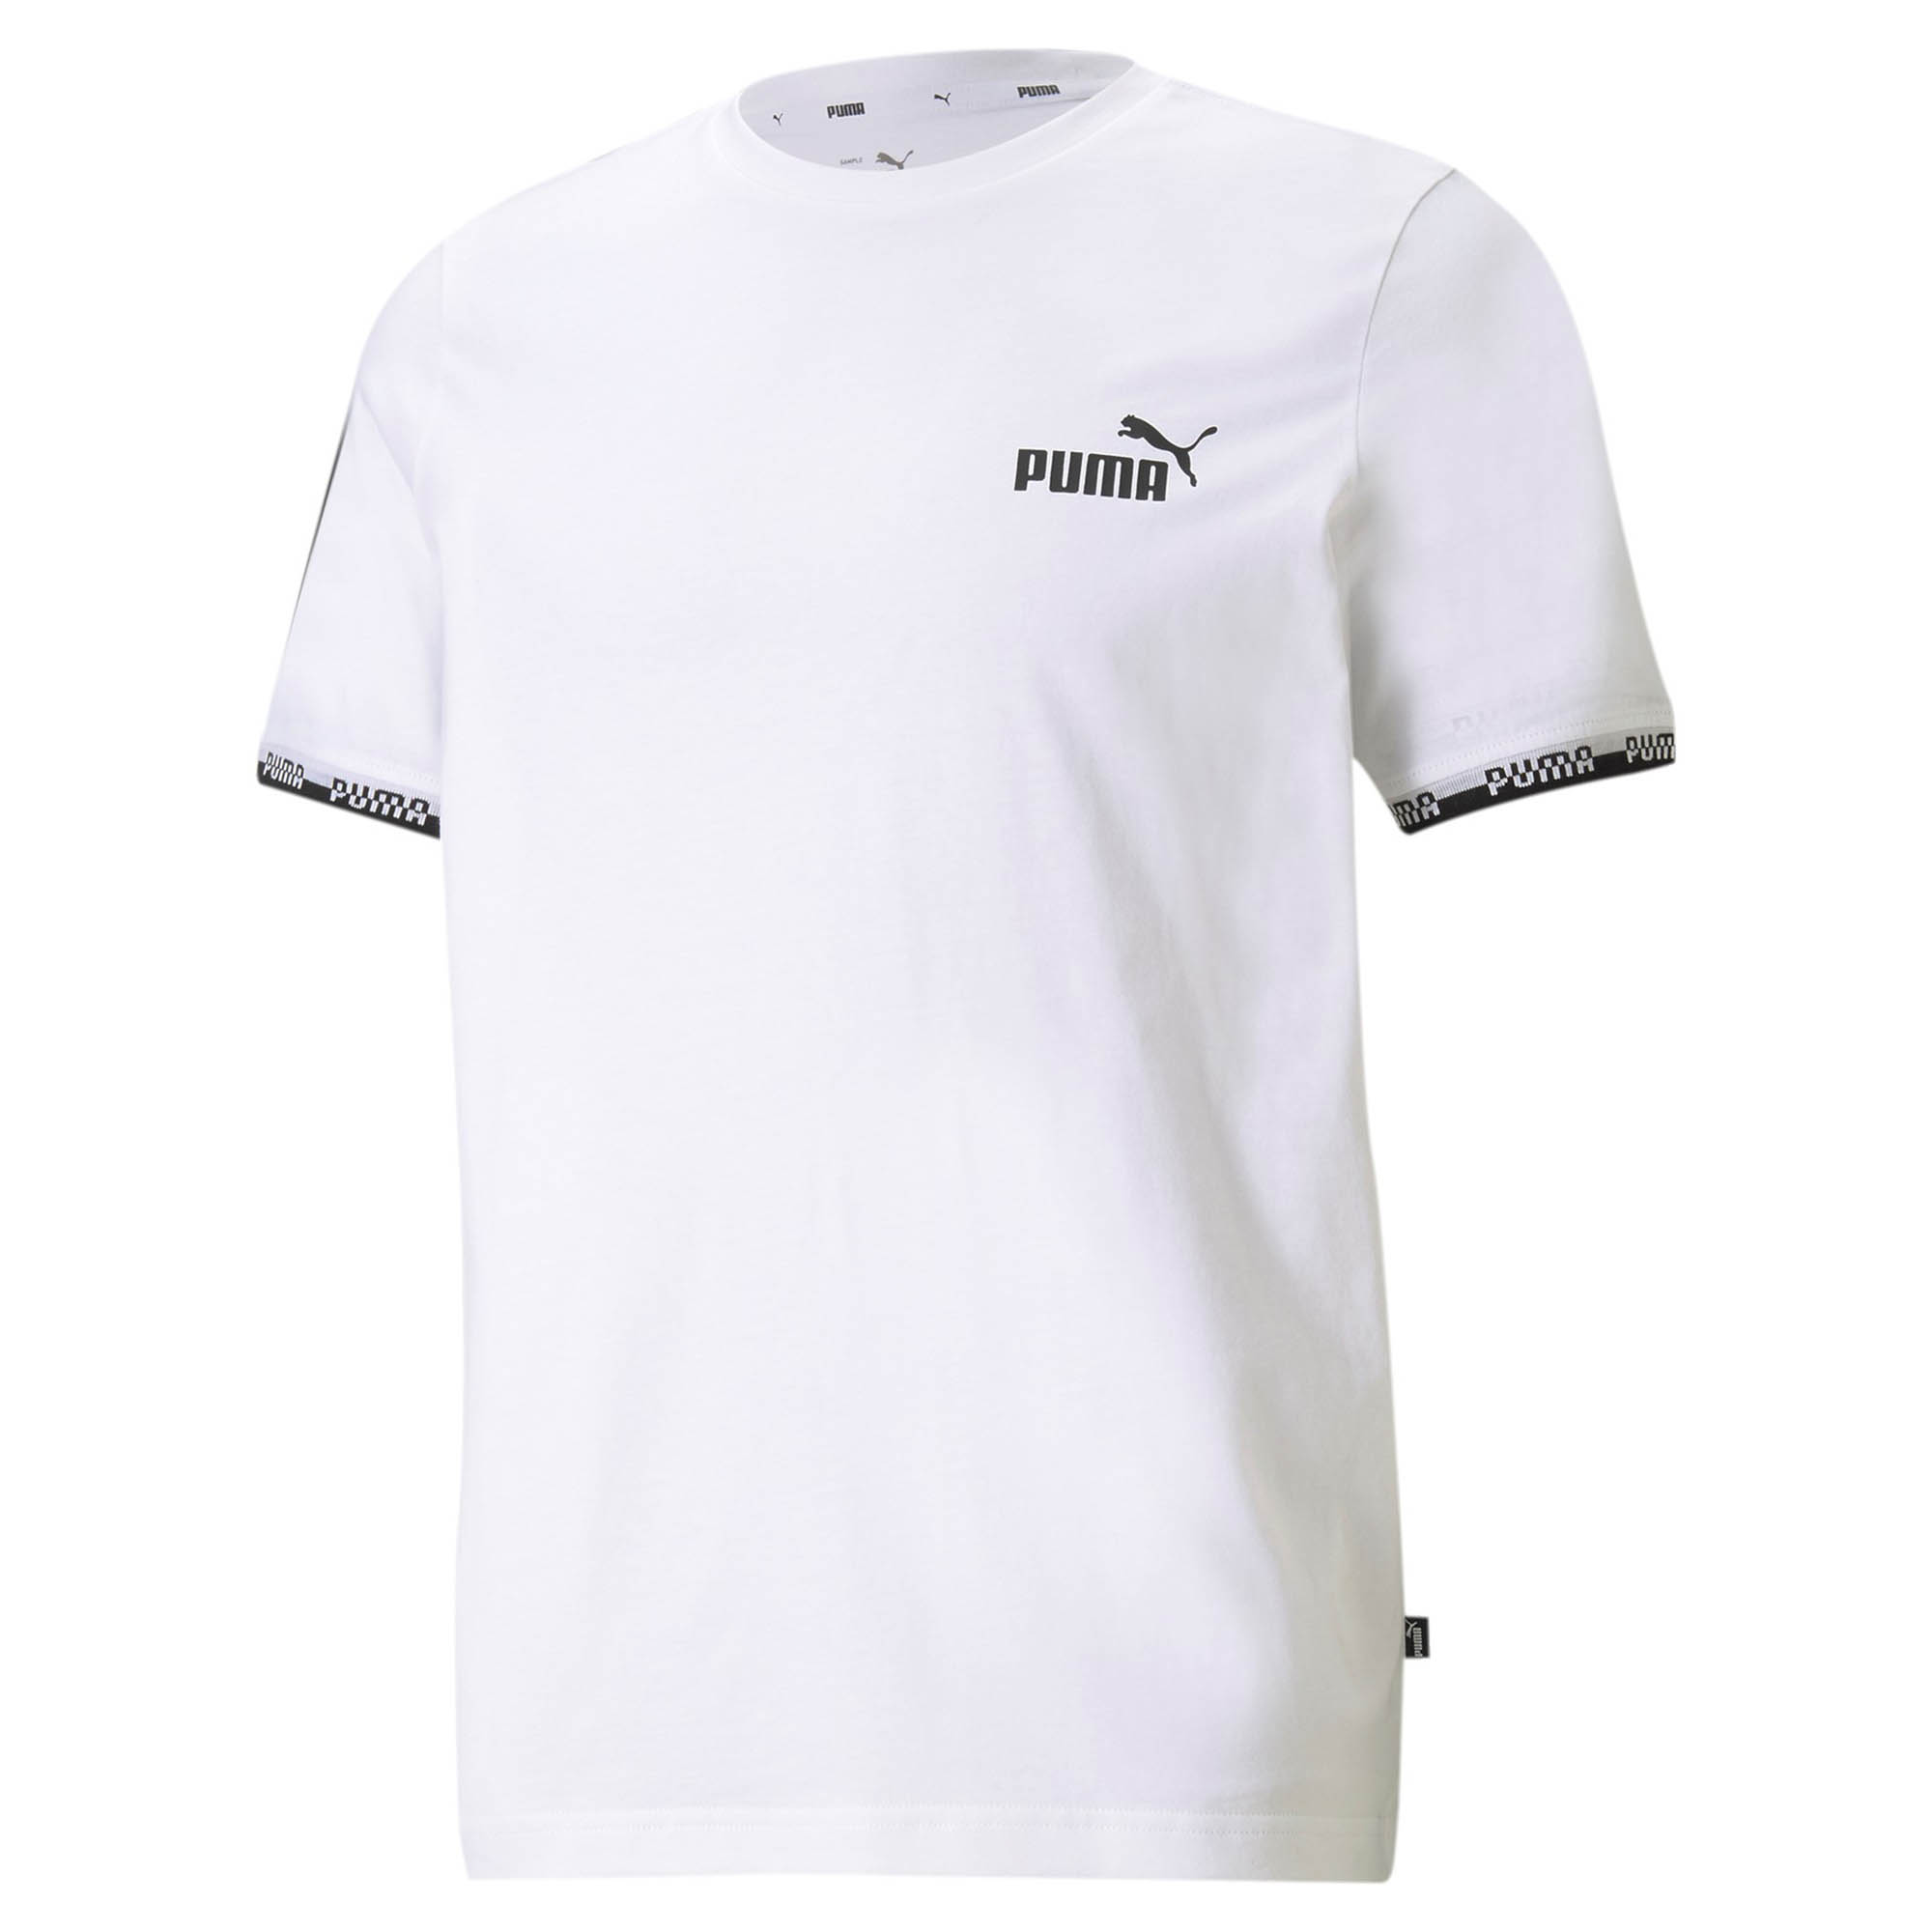 PUMA Herren Amplified Tee T-Shirt weiss 580426 02 Übergrößen - 4XL